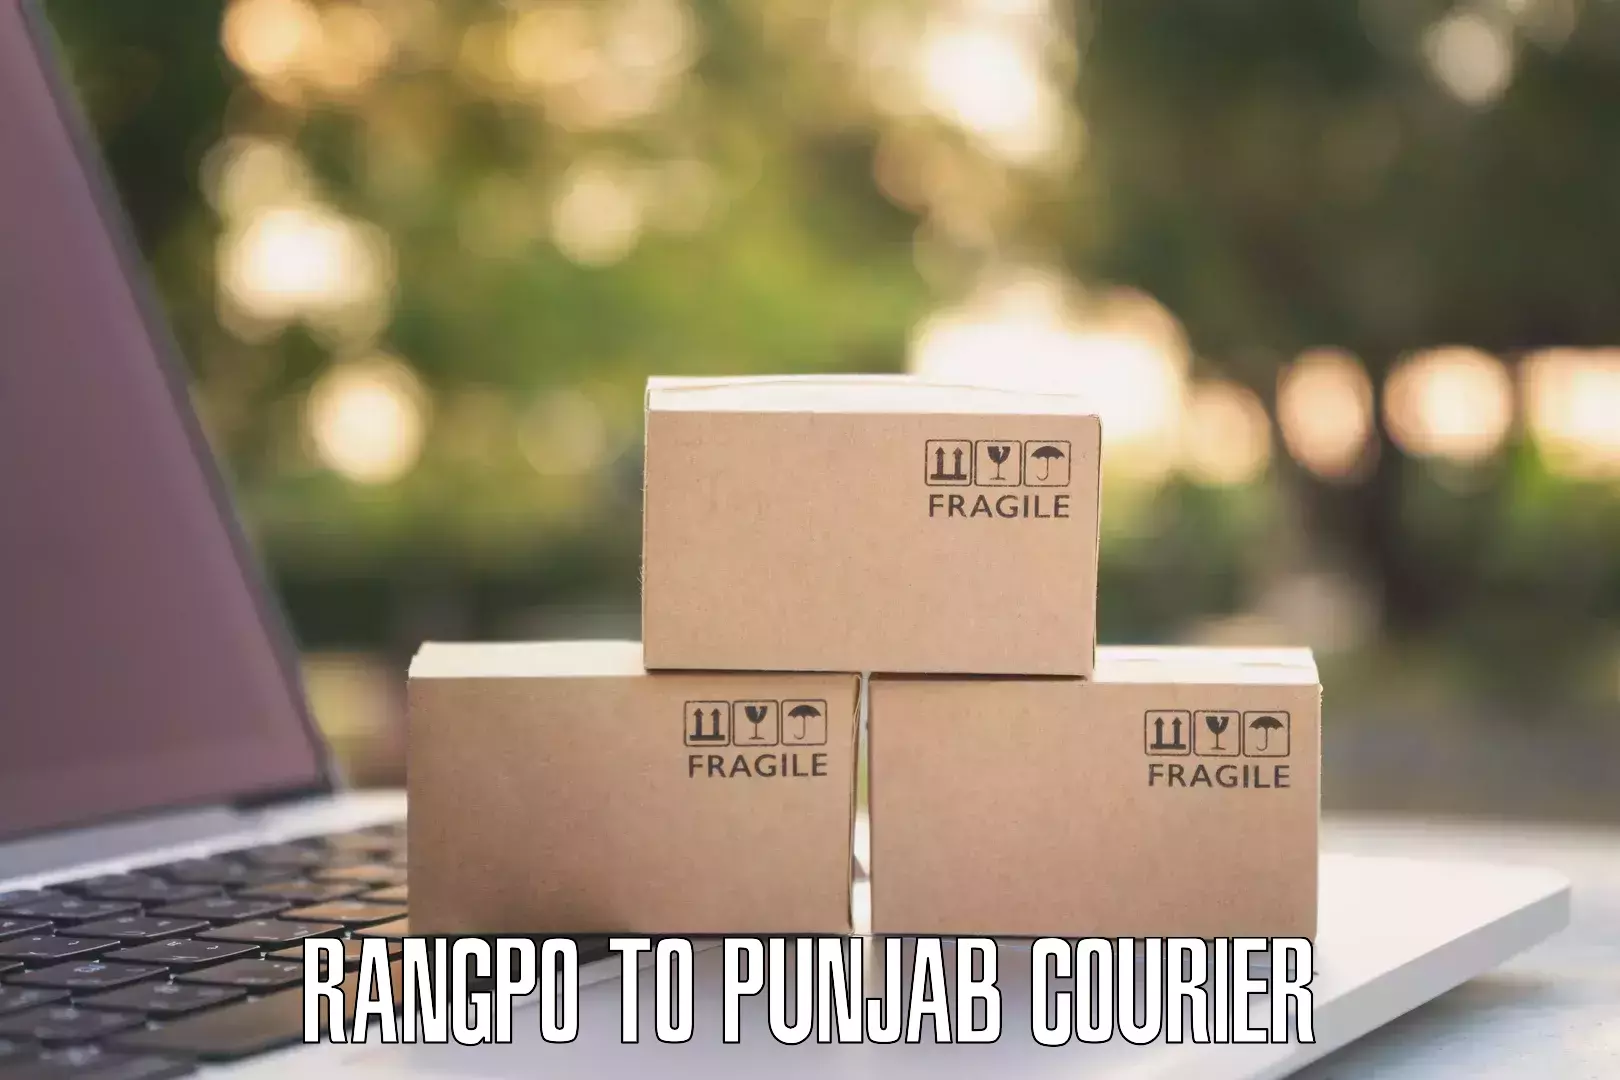 Bulk shipping discounts Rangpo to Begowal